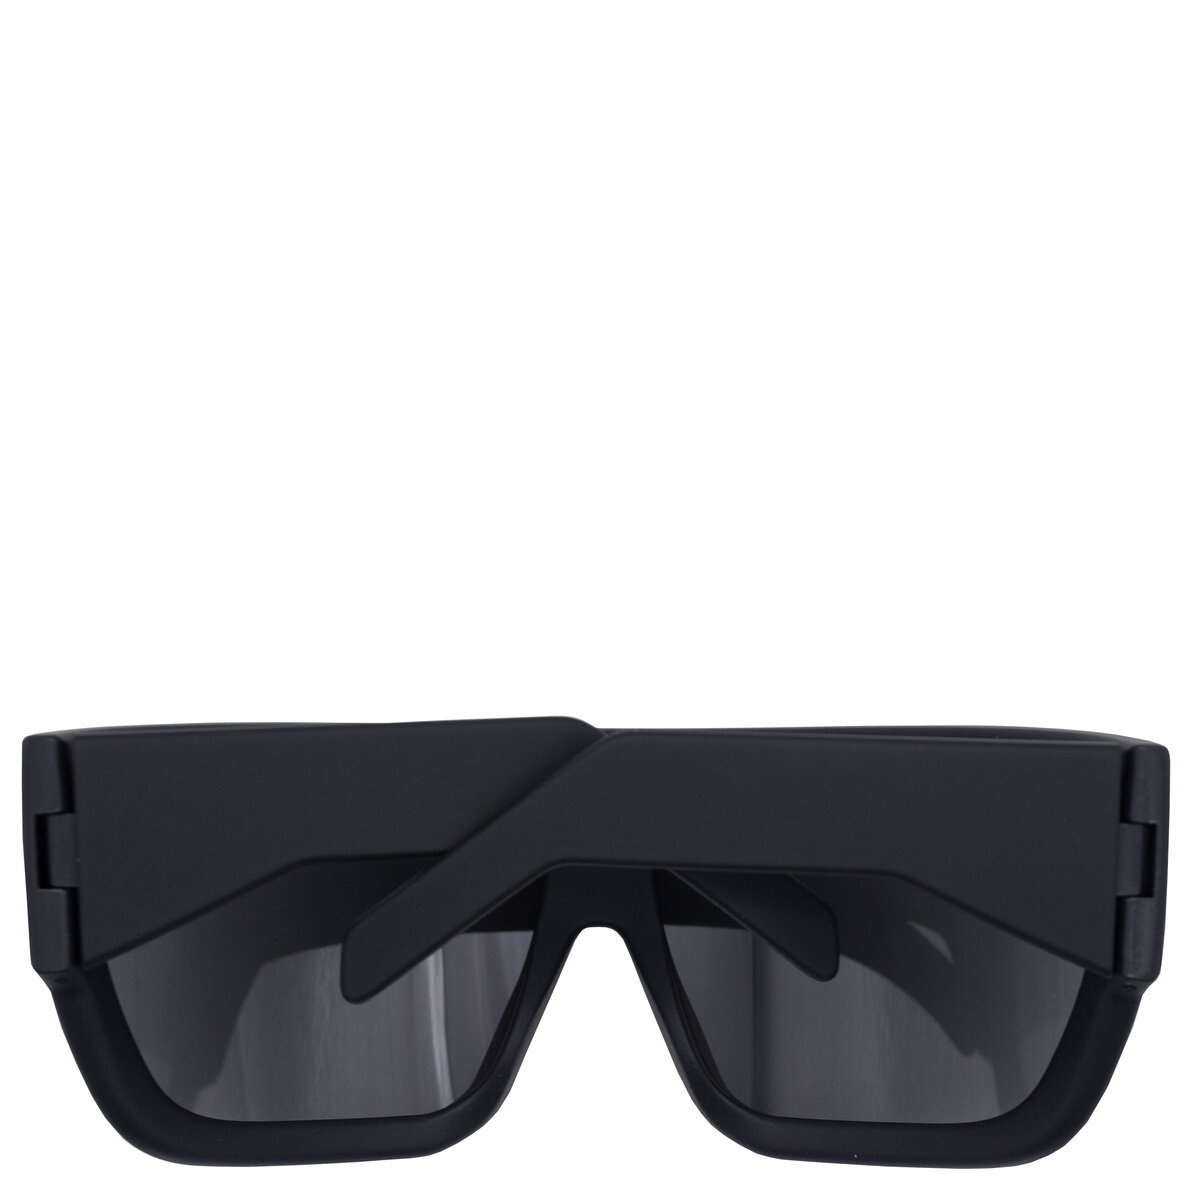 Davis Sunglasses in Black - 6